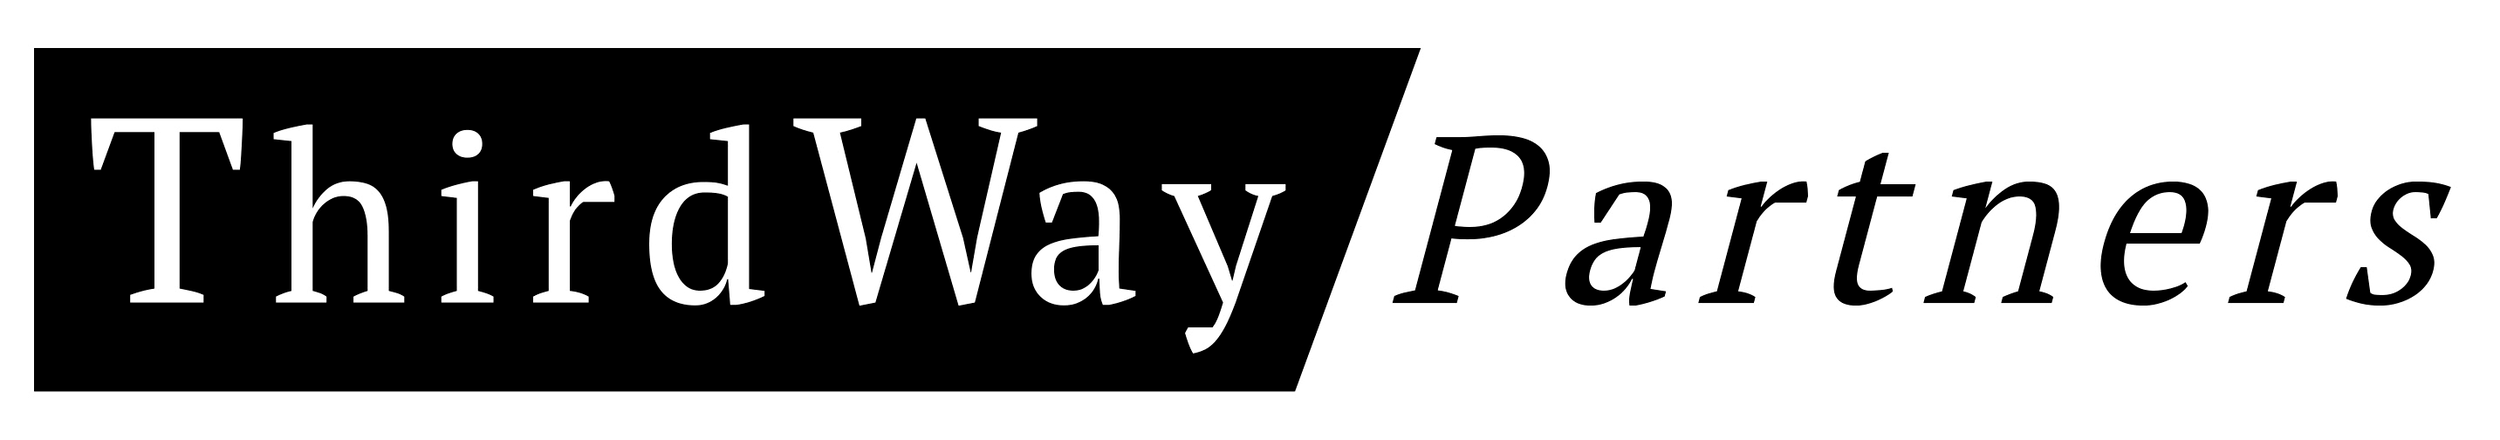 ThirdWay Partners logo